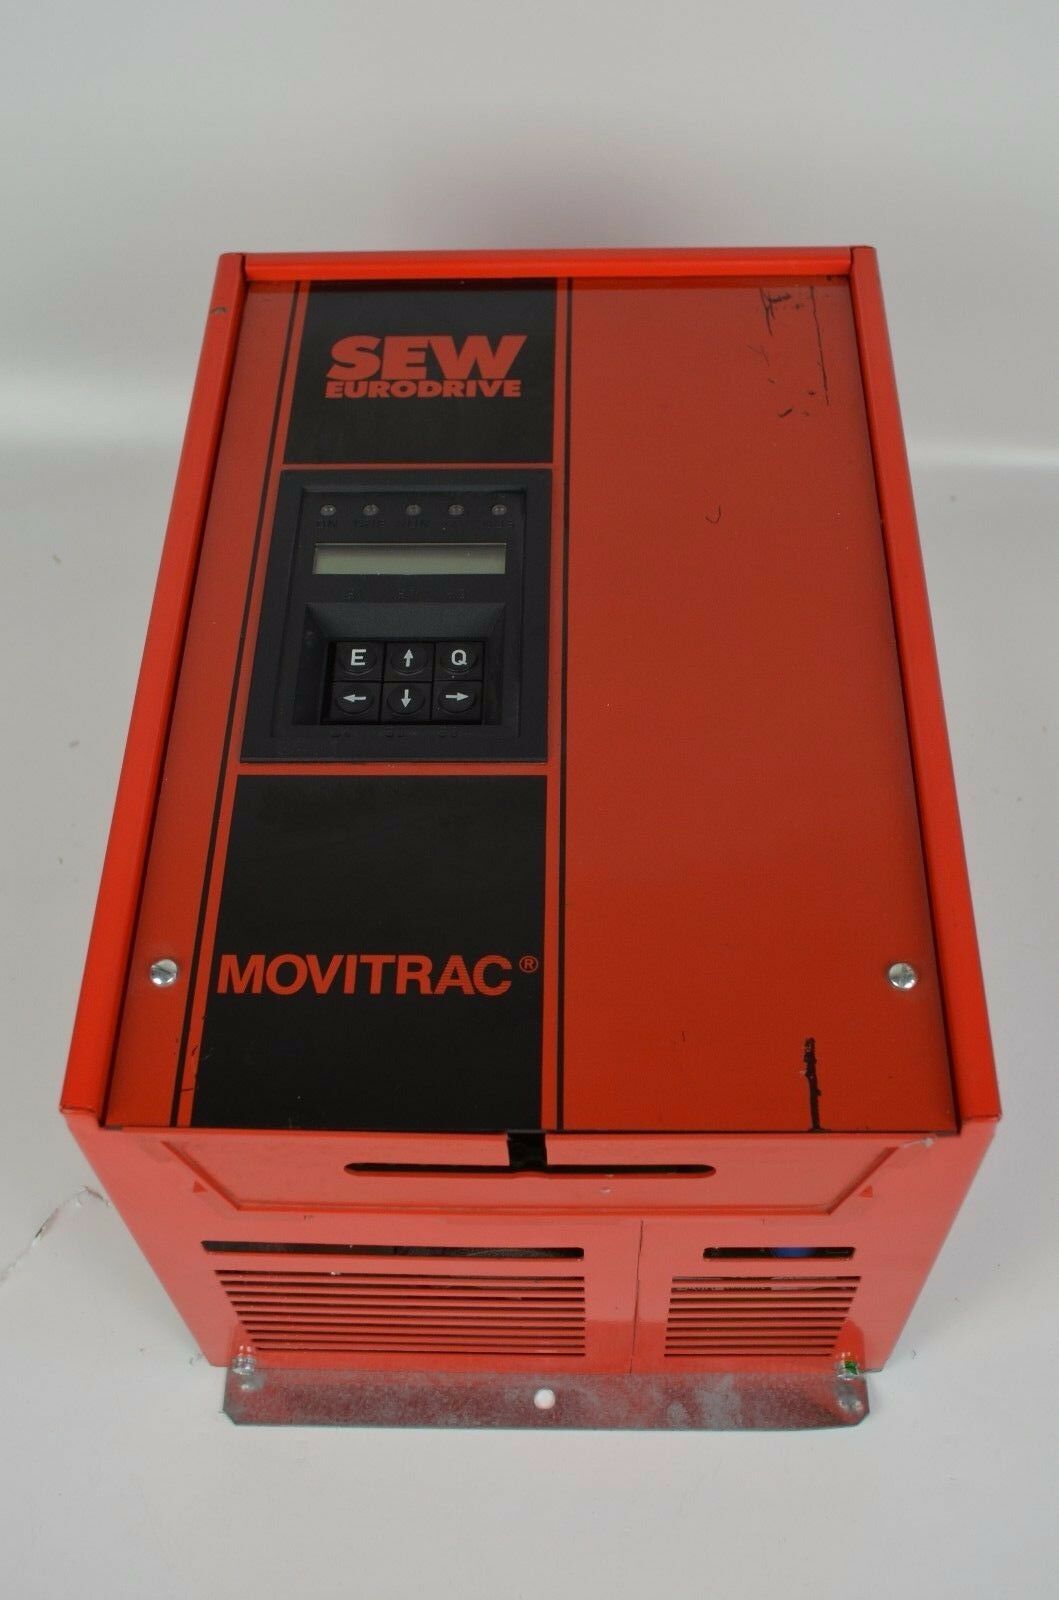 SEW Eurodrive Antriebsumrichter Movitrac 3004-403-4-00 